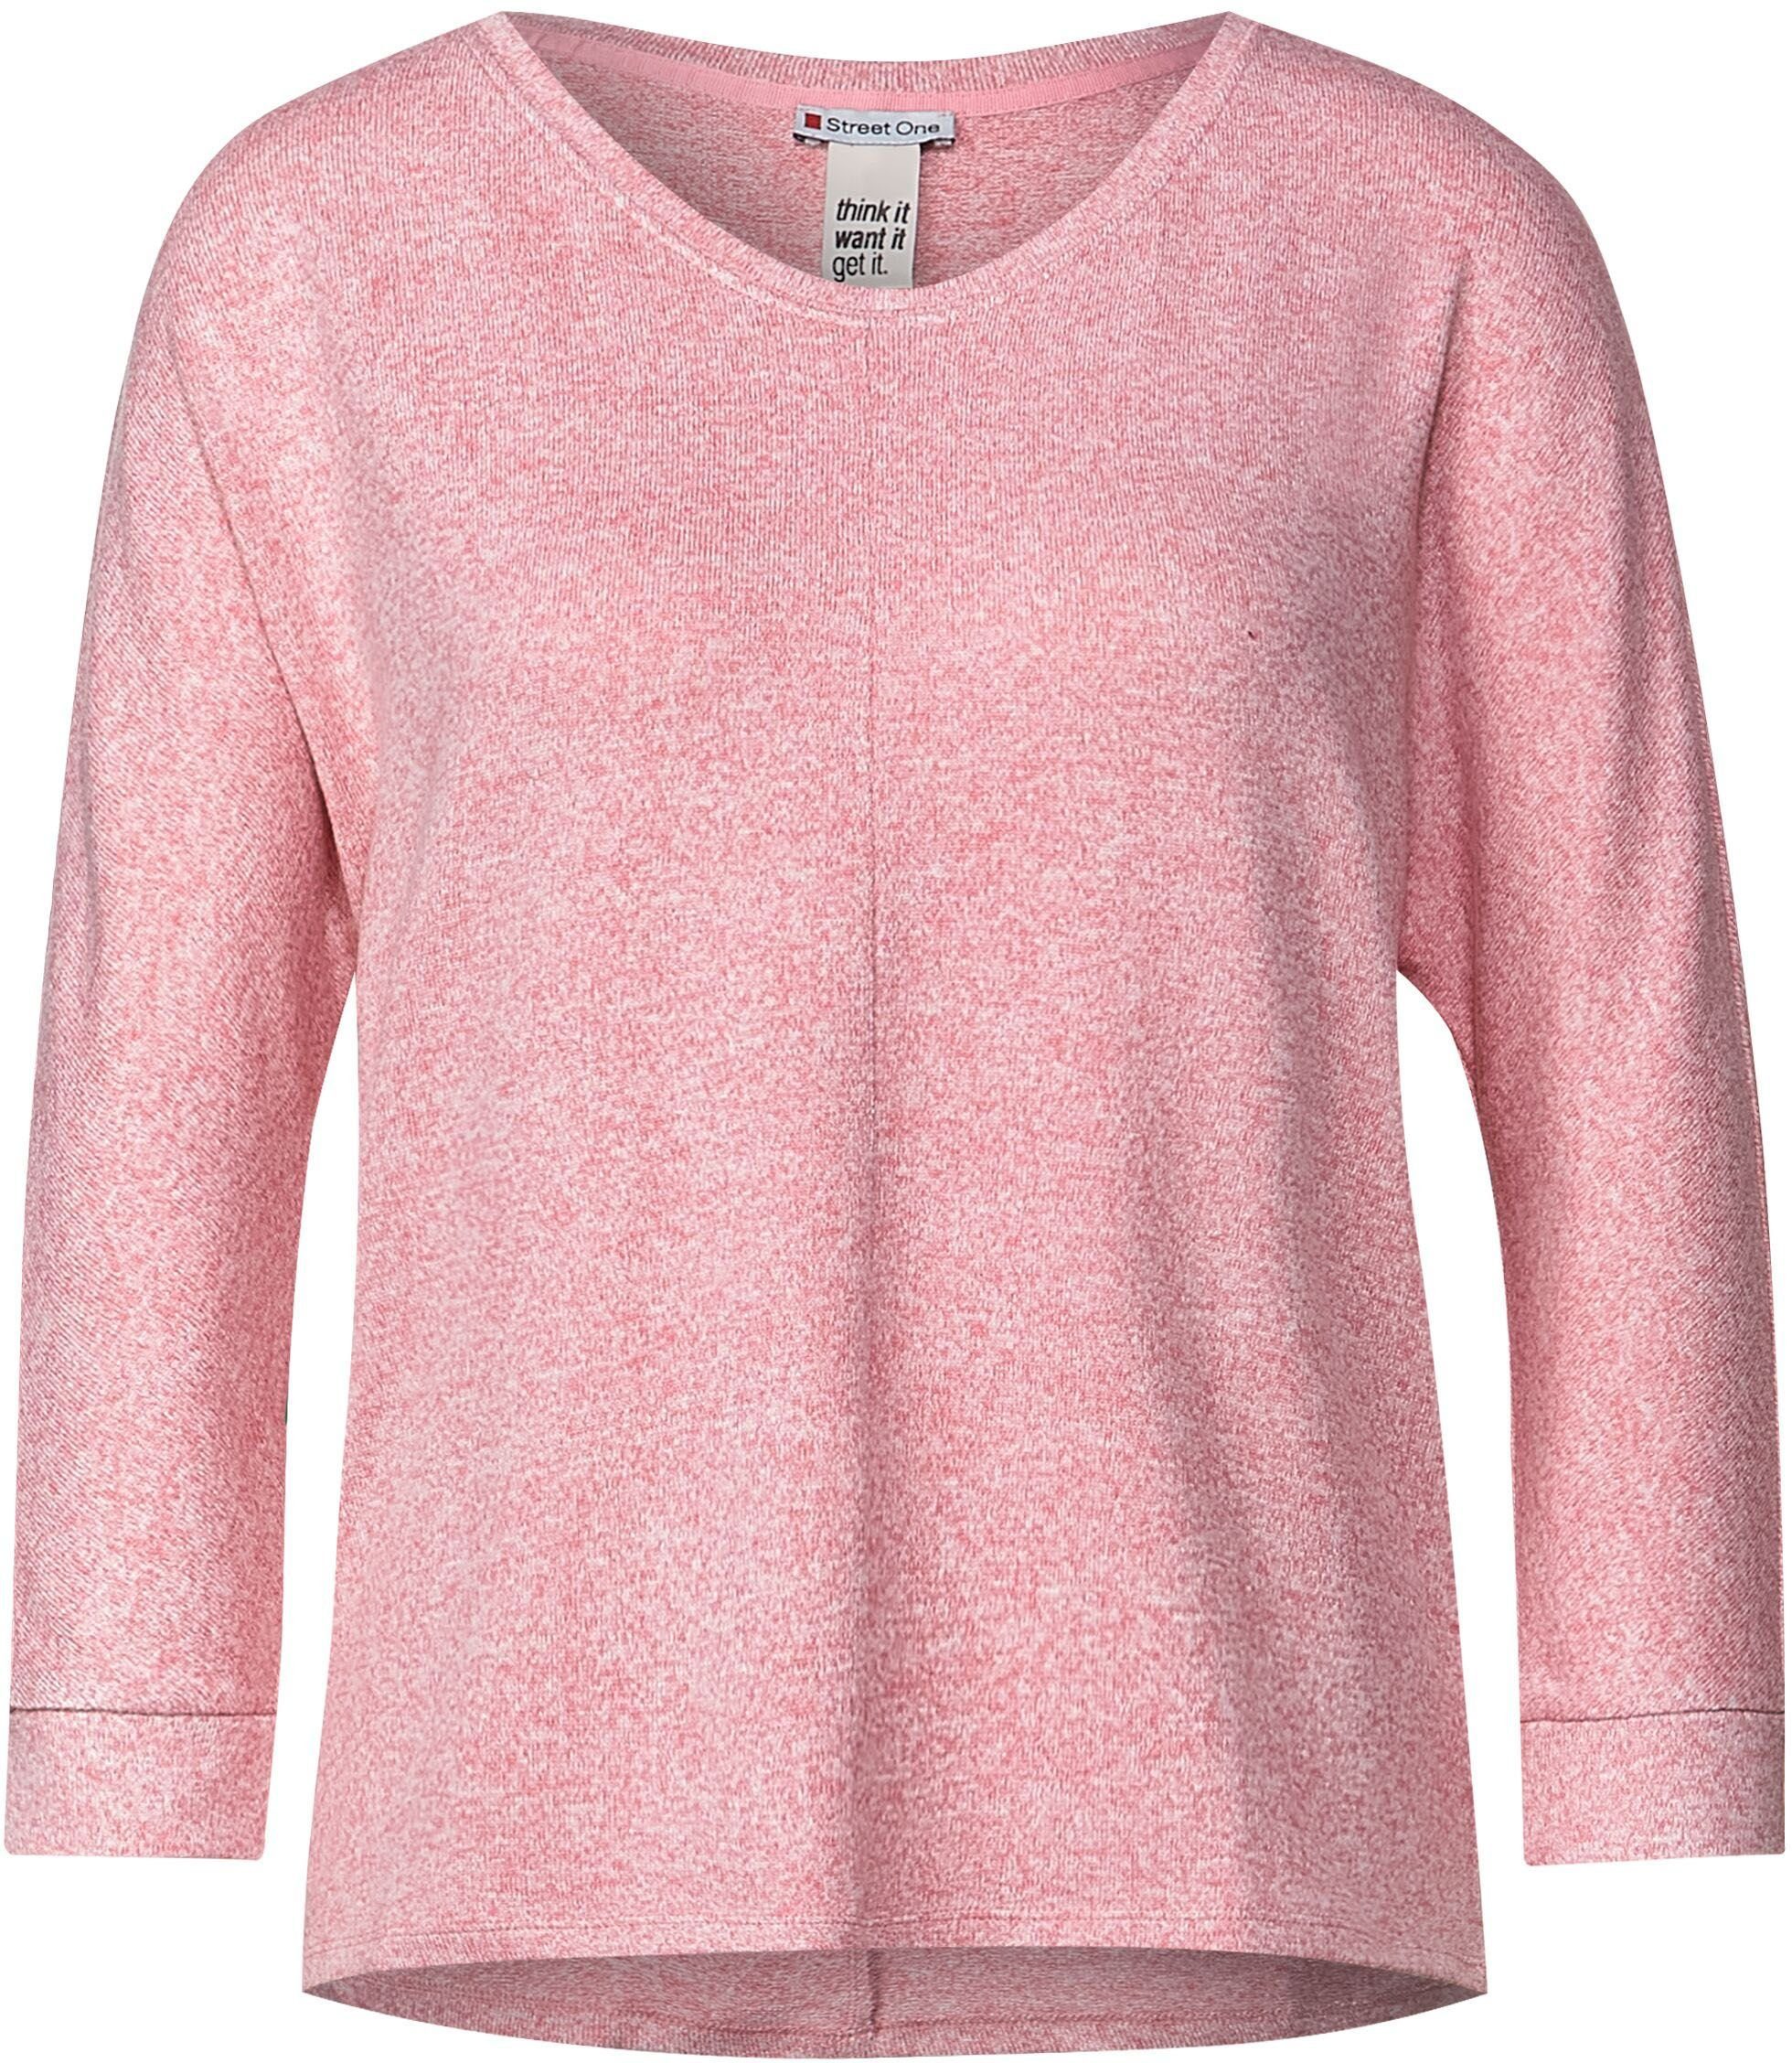 STREET ONE 3/4-Arm-Shirt in winter rose Melange-Optik Ellen melange Style